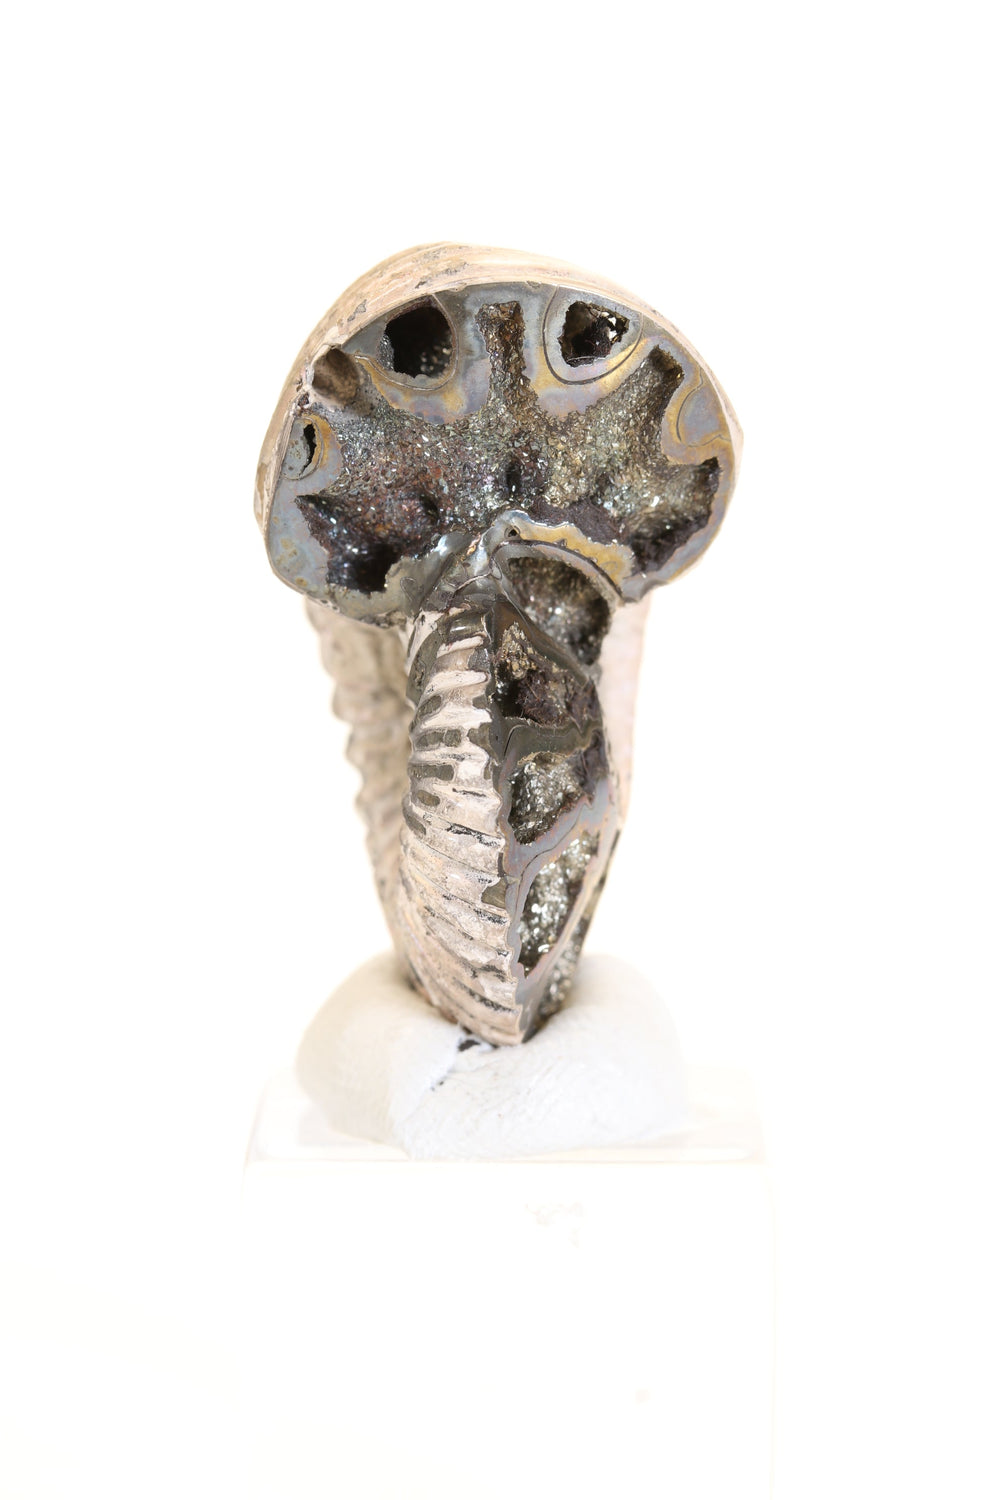 Pyritized Ammonite Fossil TD1787